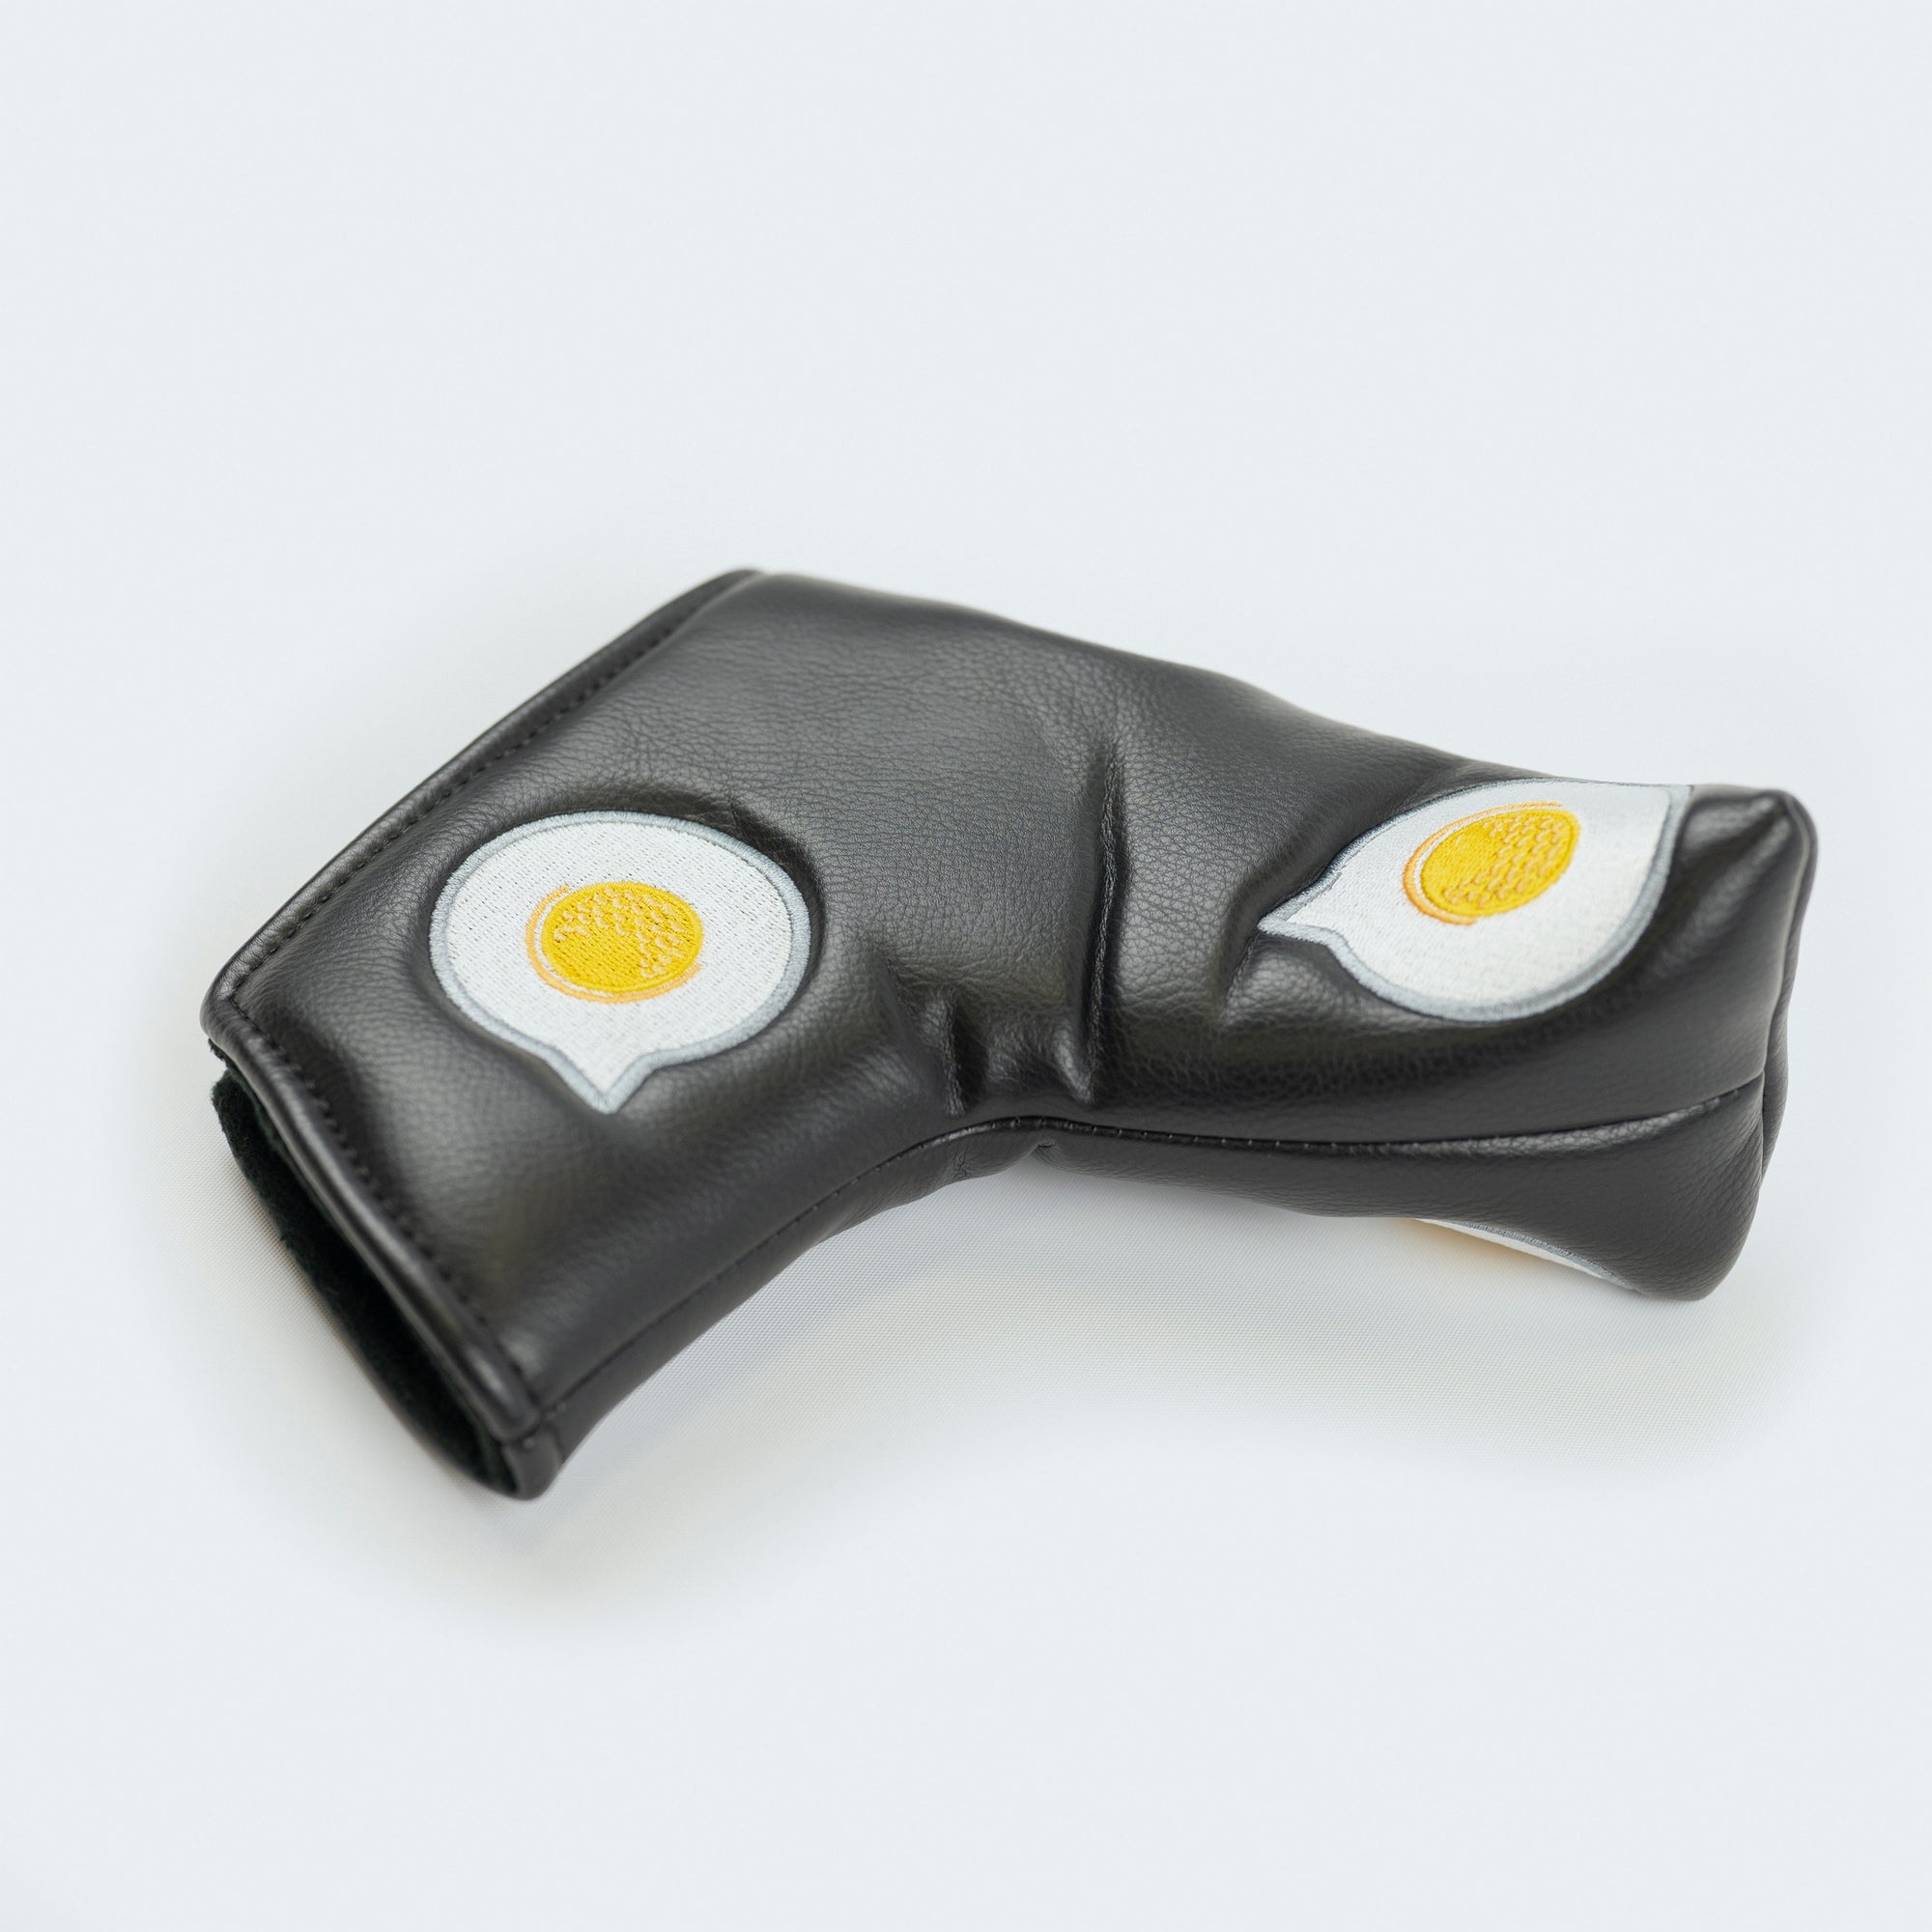 The Fried Egg Blade Putter Cover - Black